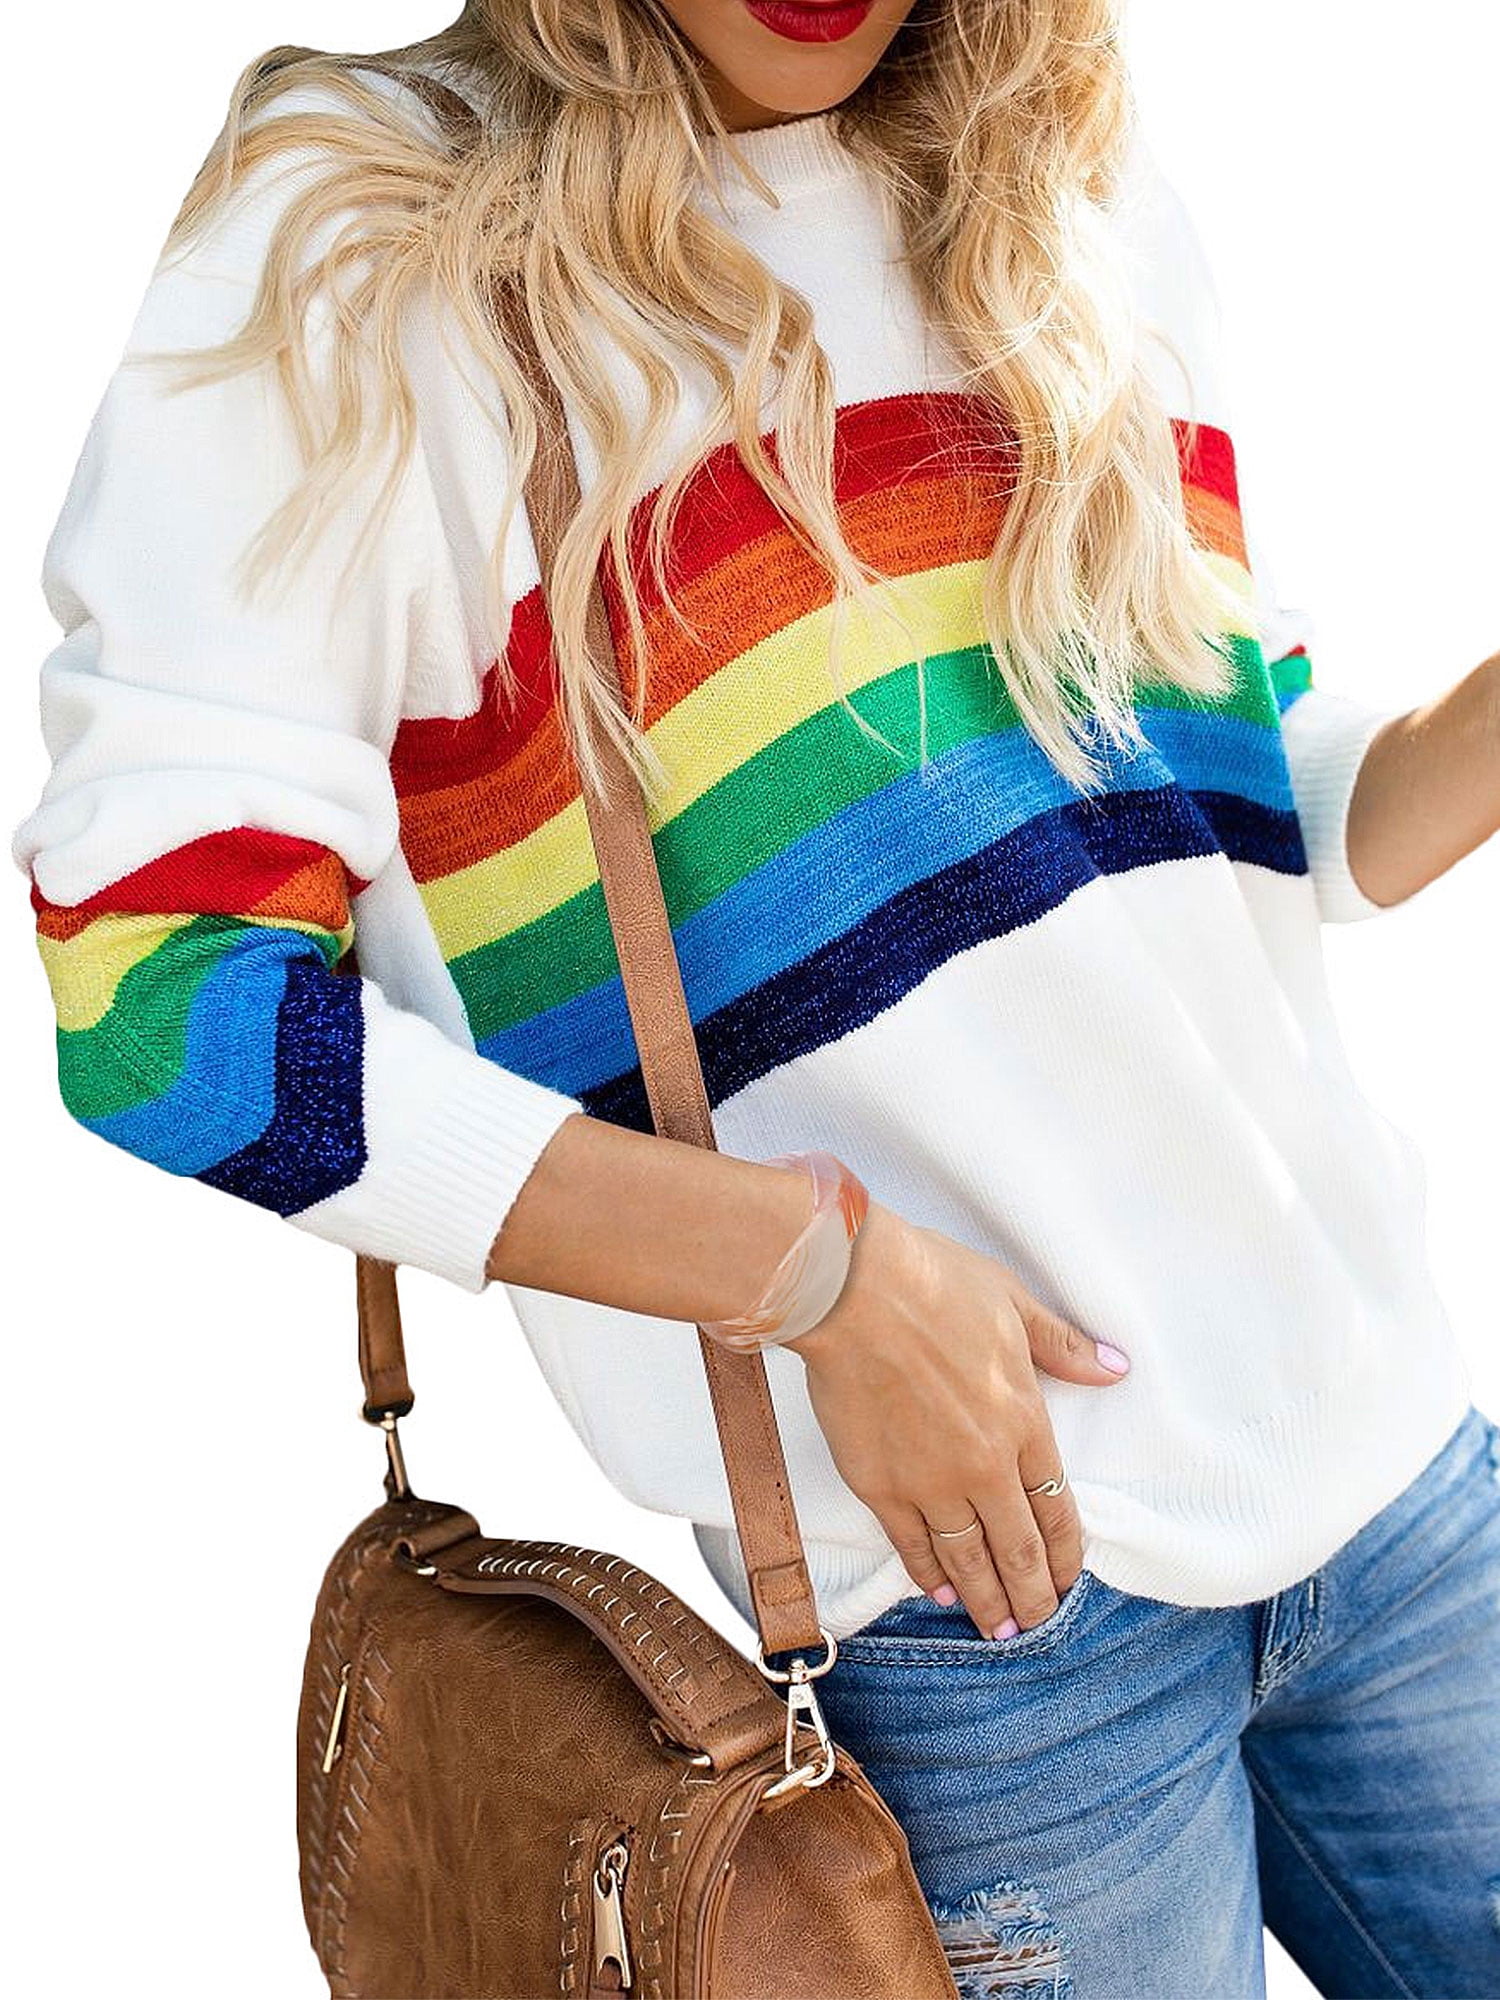 Fashionhe Rainbow Patchwork O Neck Sweatshirt Women Casual Blouse Pullover Tops